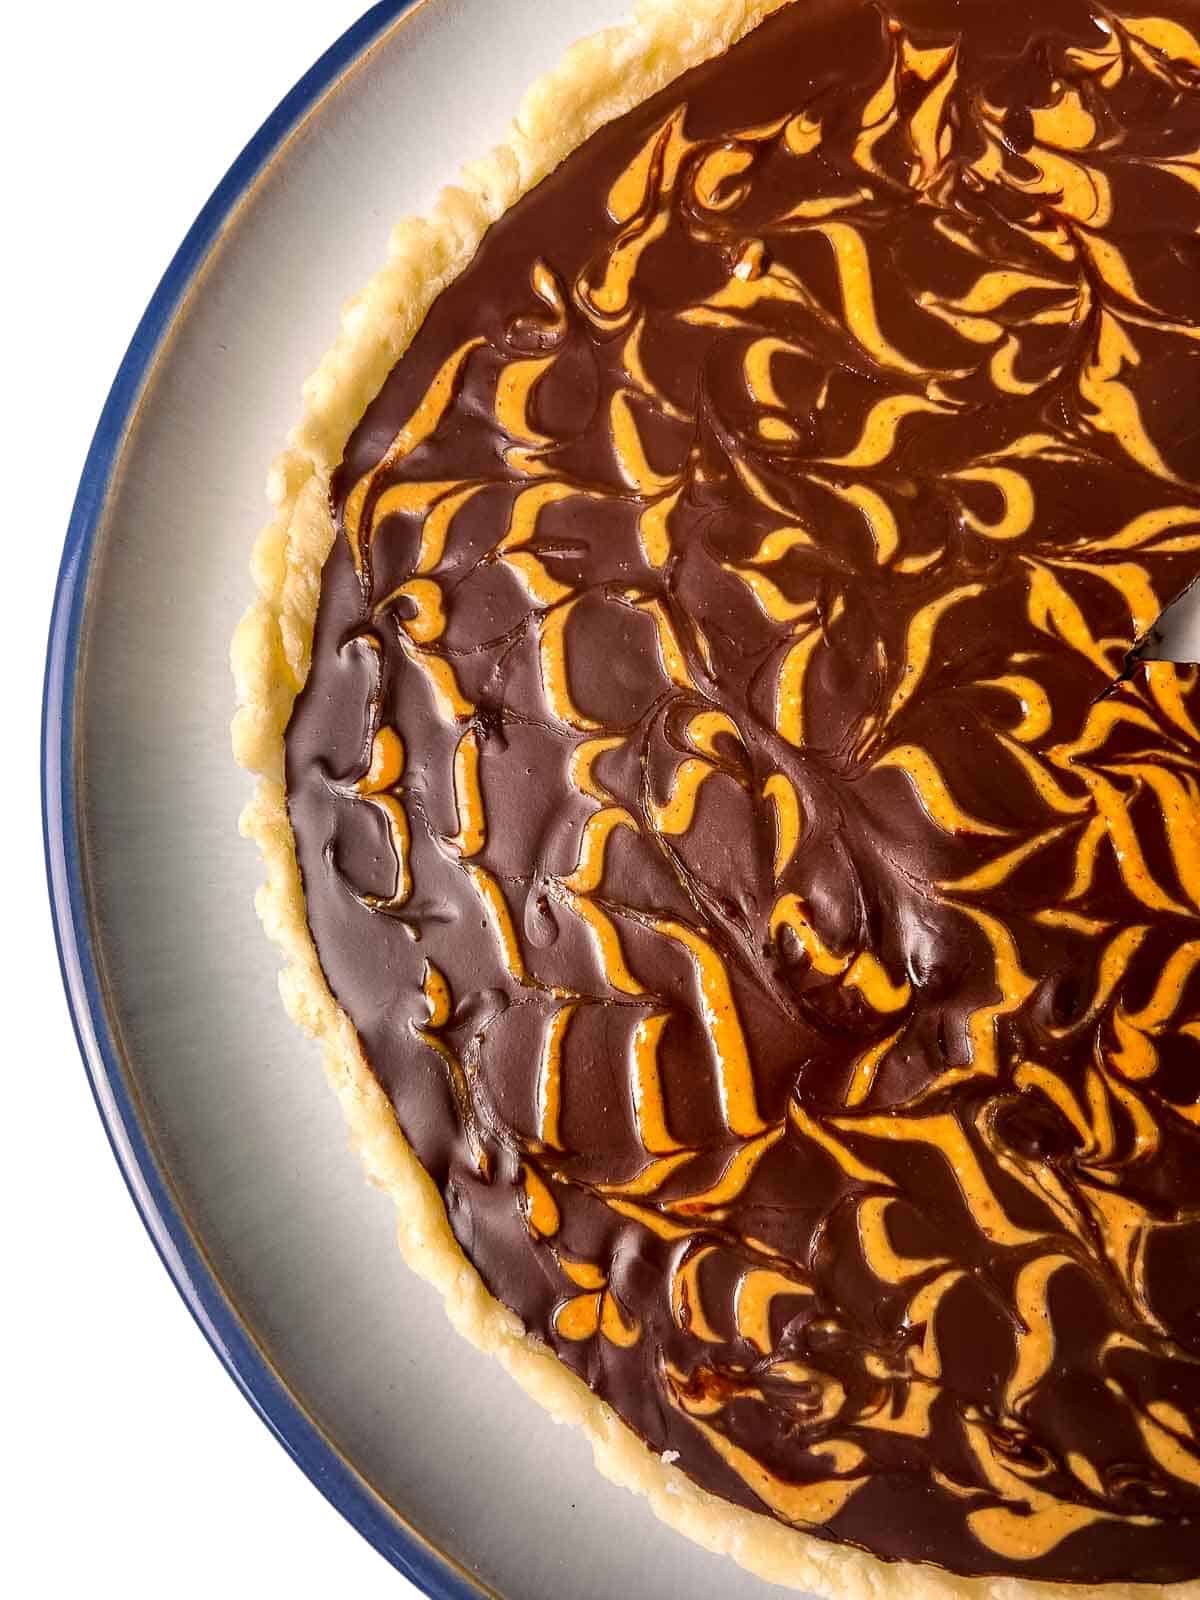 Peanut butter swirls on chocolate peanut butter swirl pie.